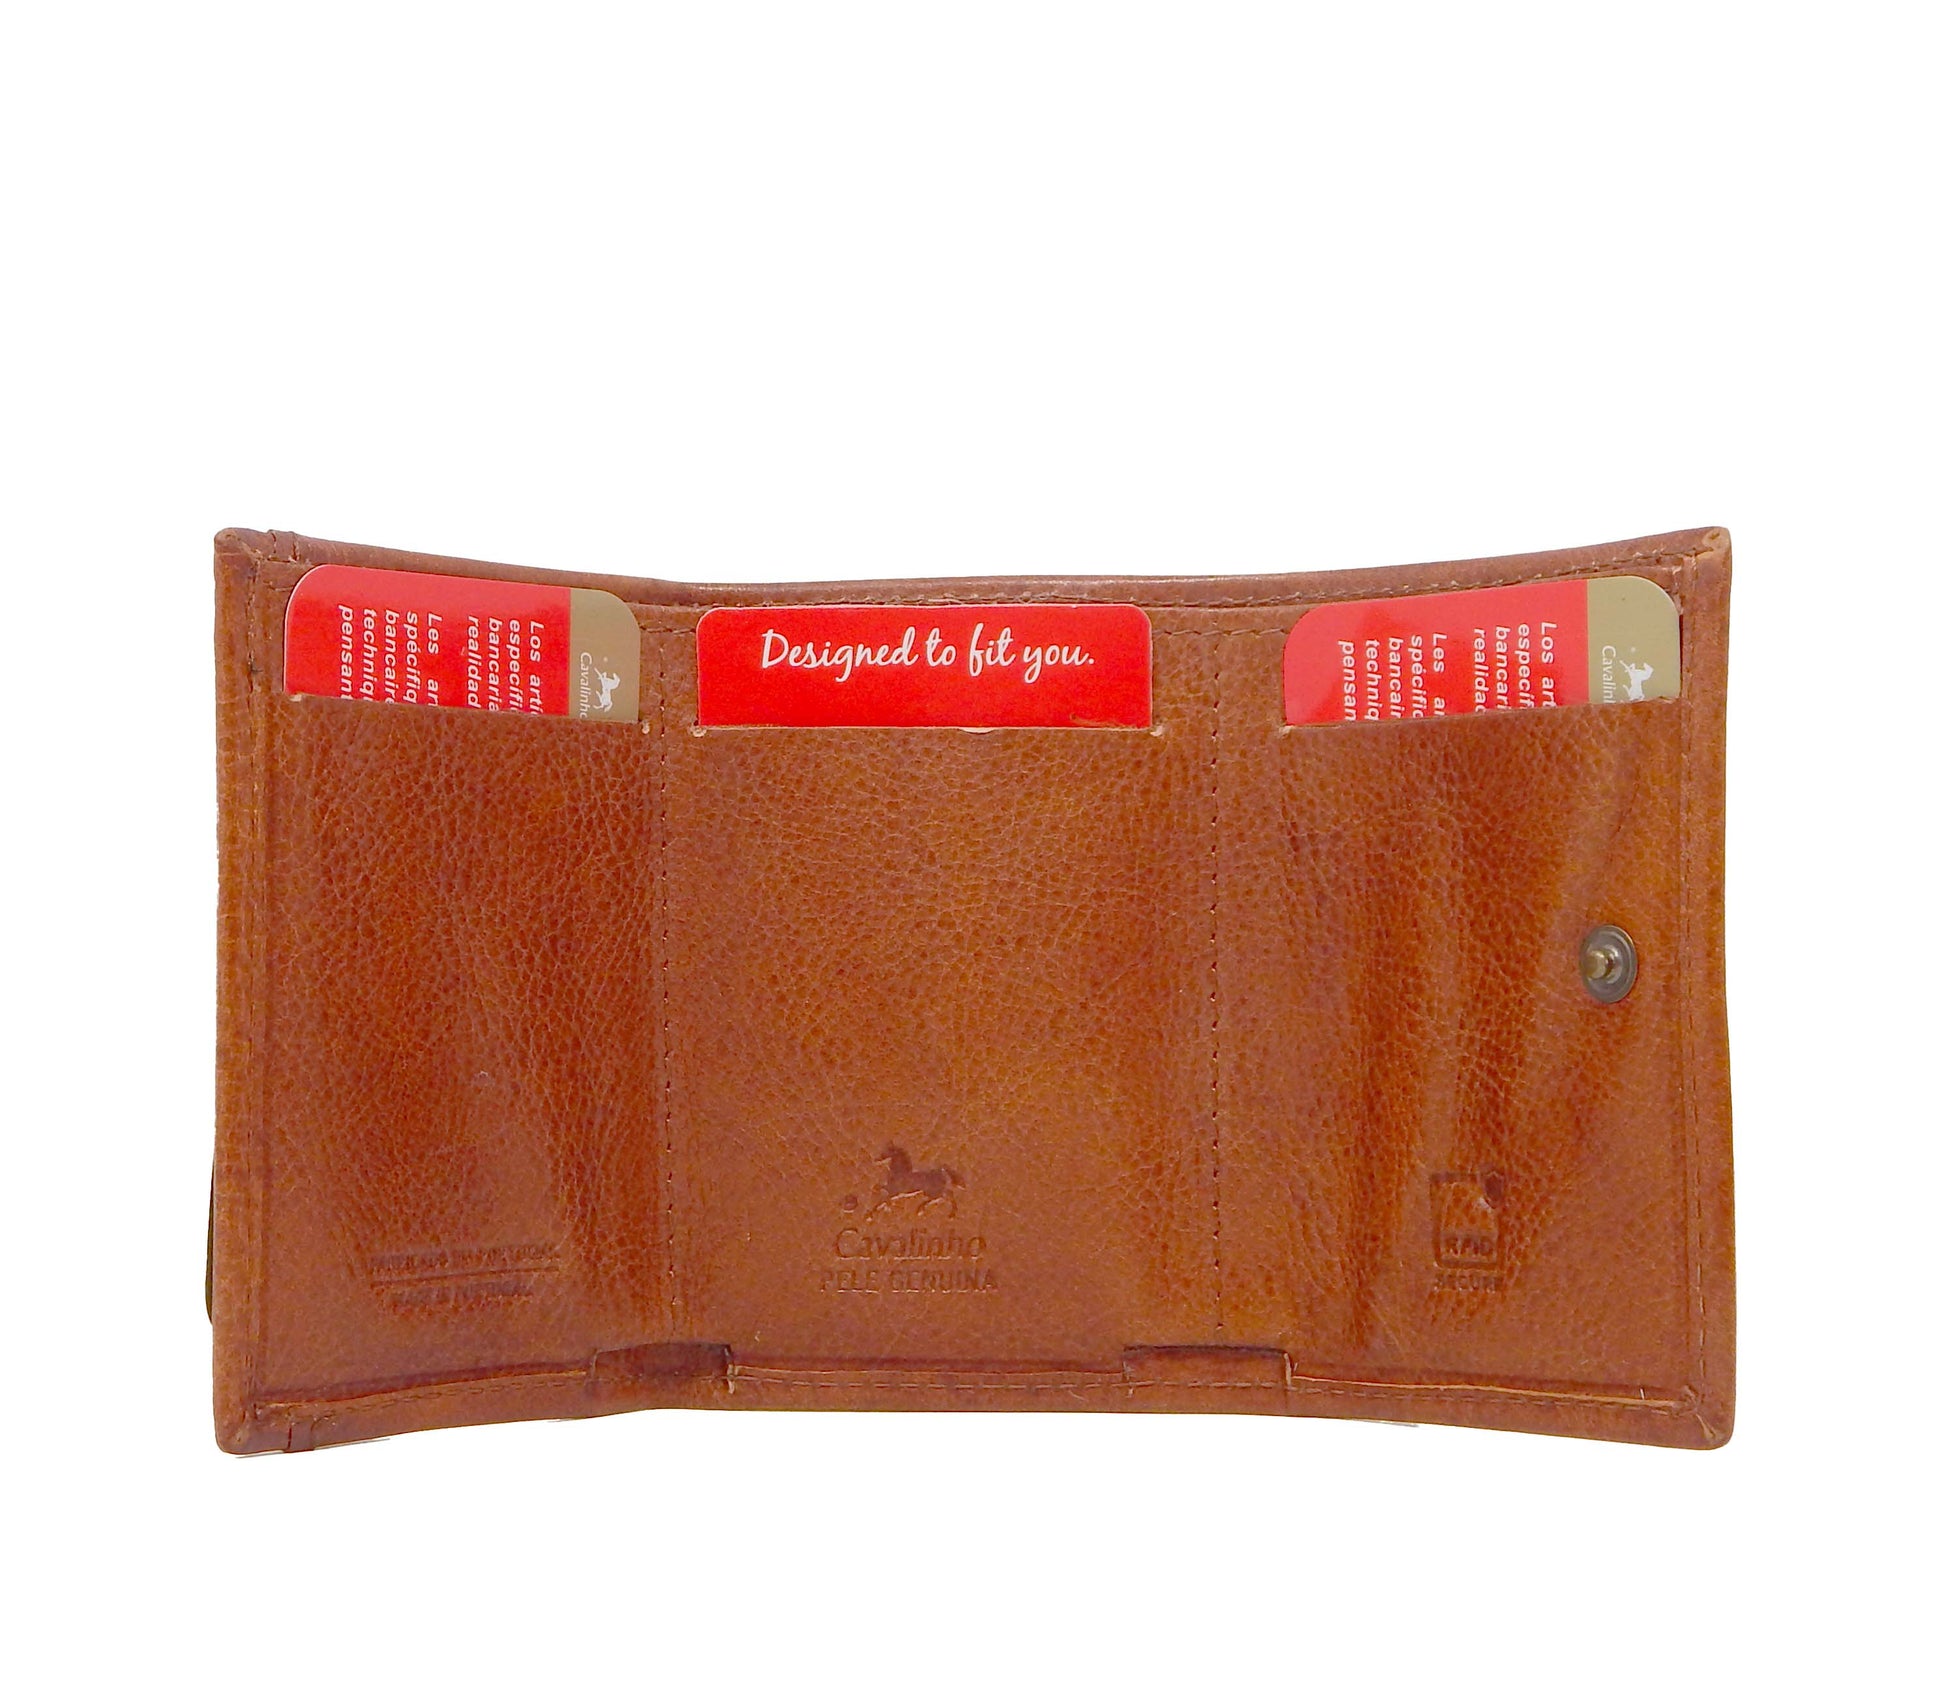 Cavalinho Men's Compact Leather Wallet - SaddleBrown - 28610539.13.99_4